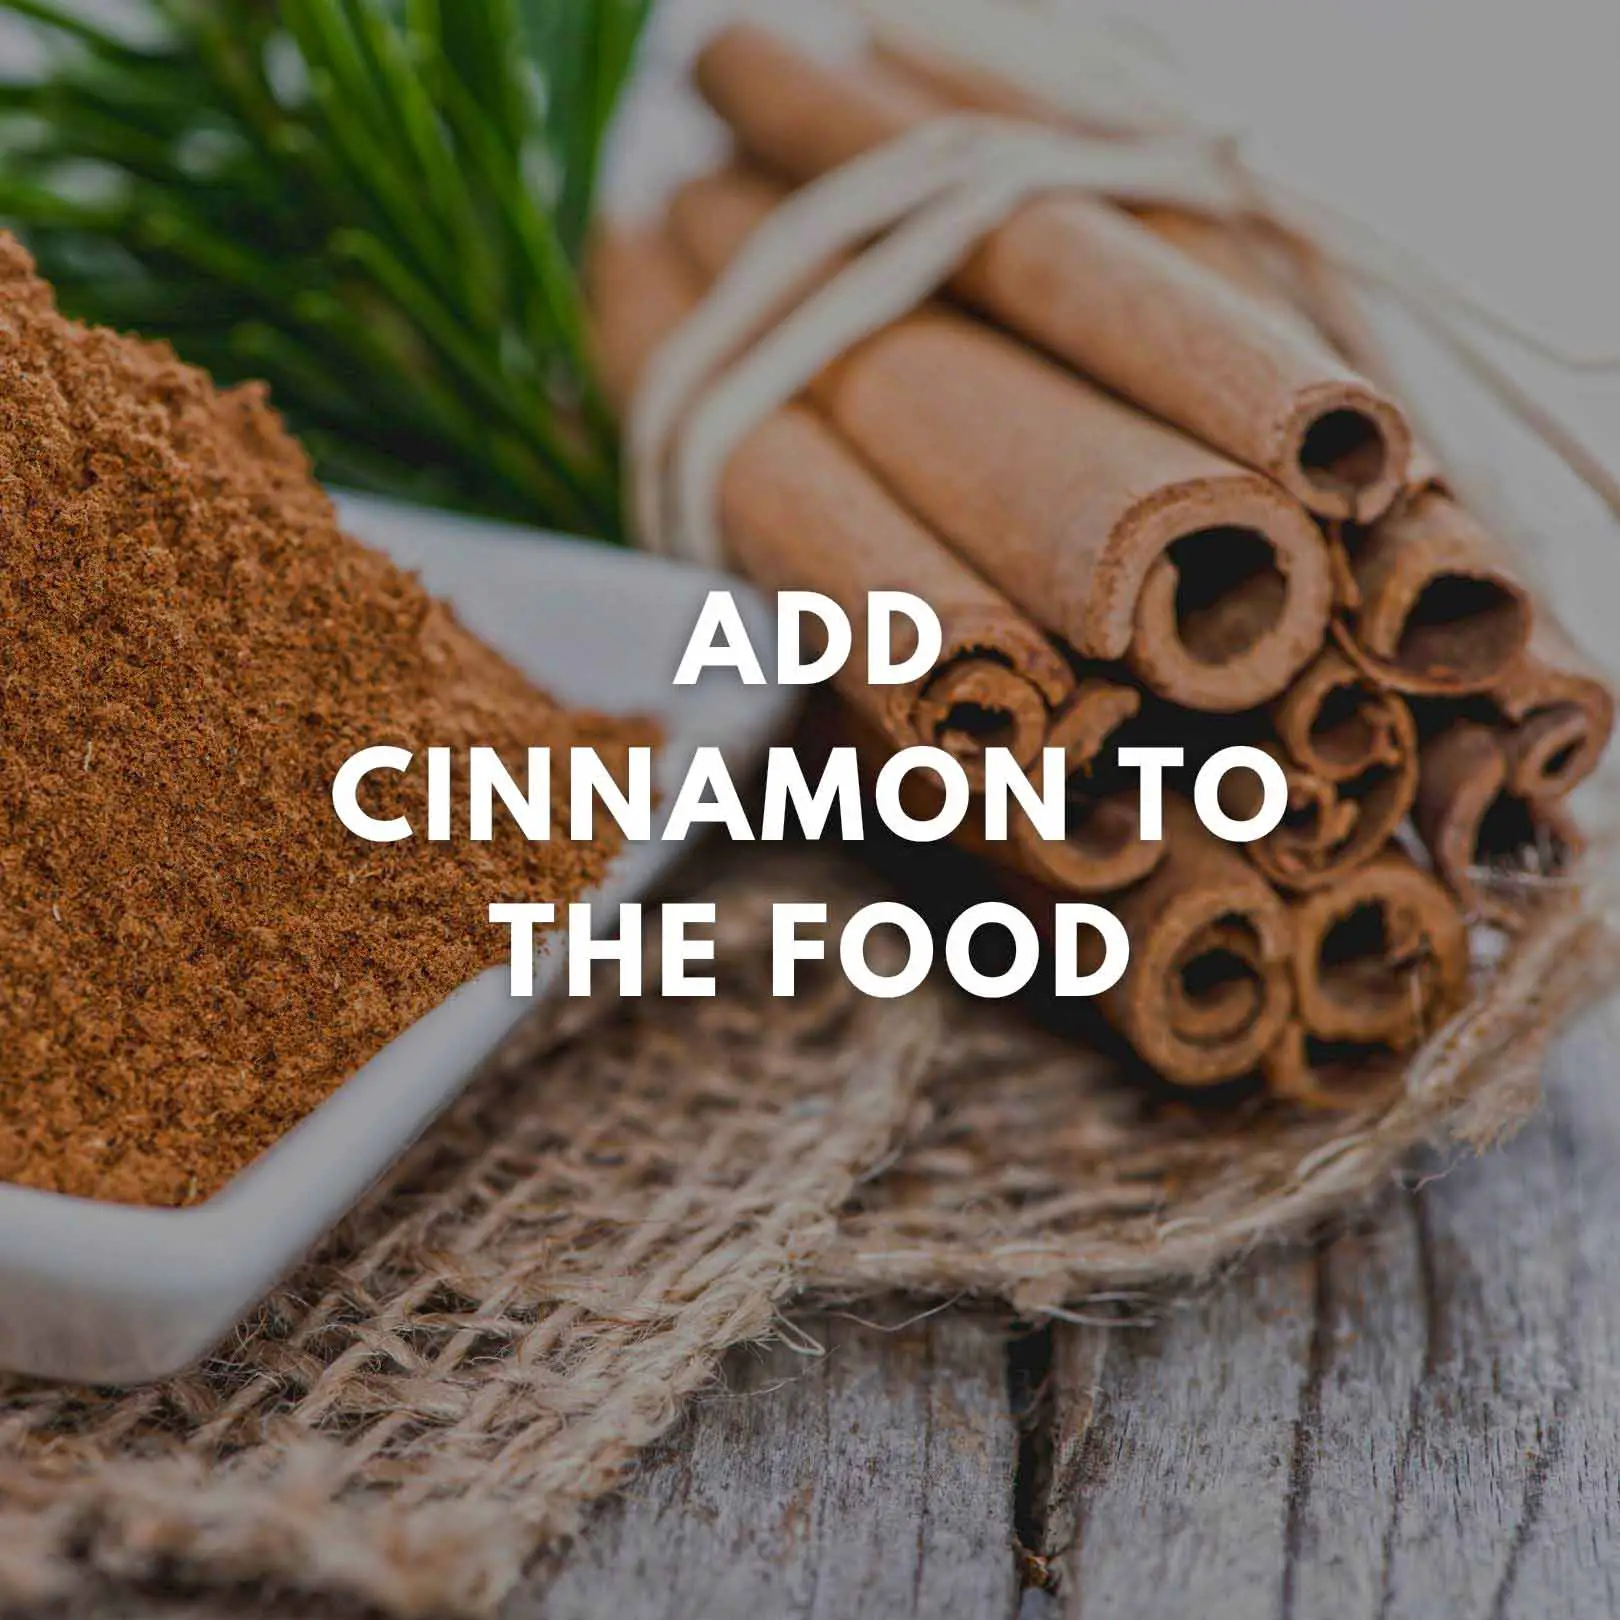 Add cinnamon to the food